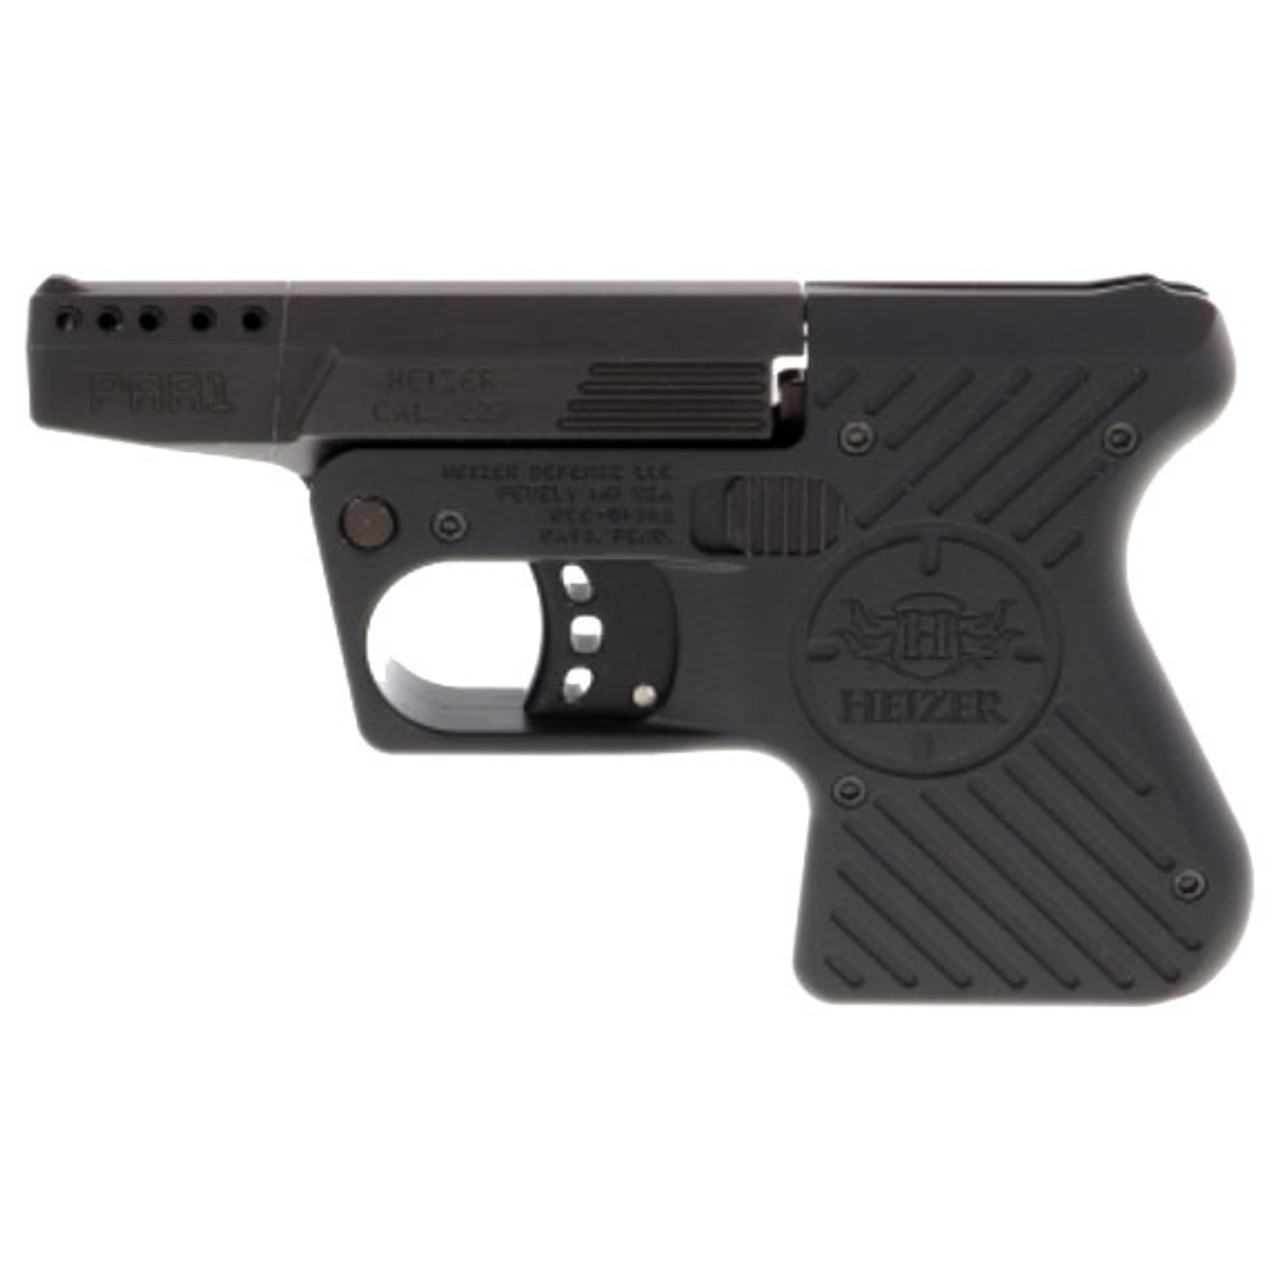 First Look: Heizer Defense PAR1 Pocket AR Pistol - Guns and Ammo, hdhdhdhdh  